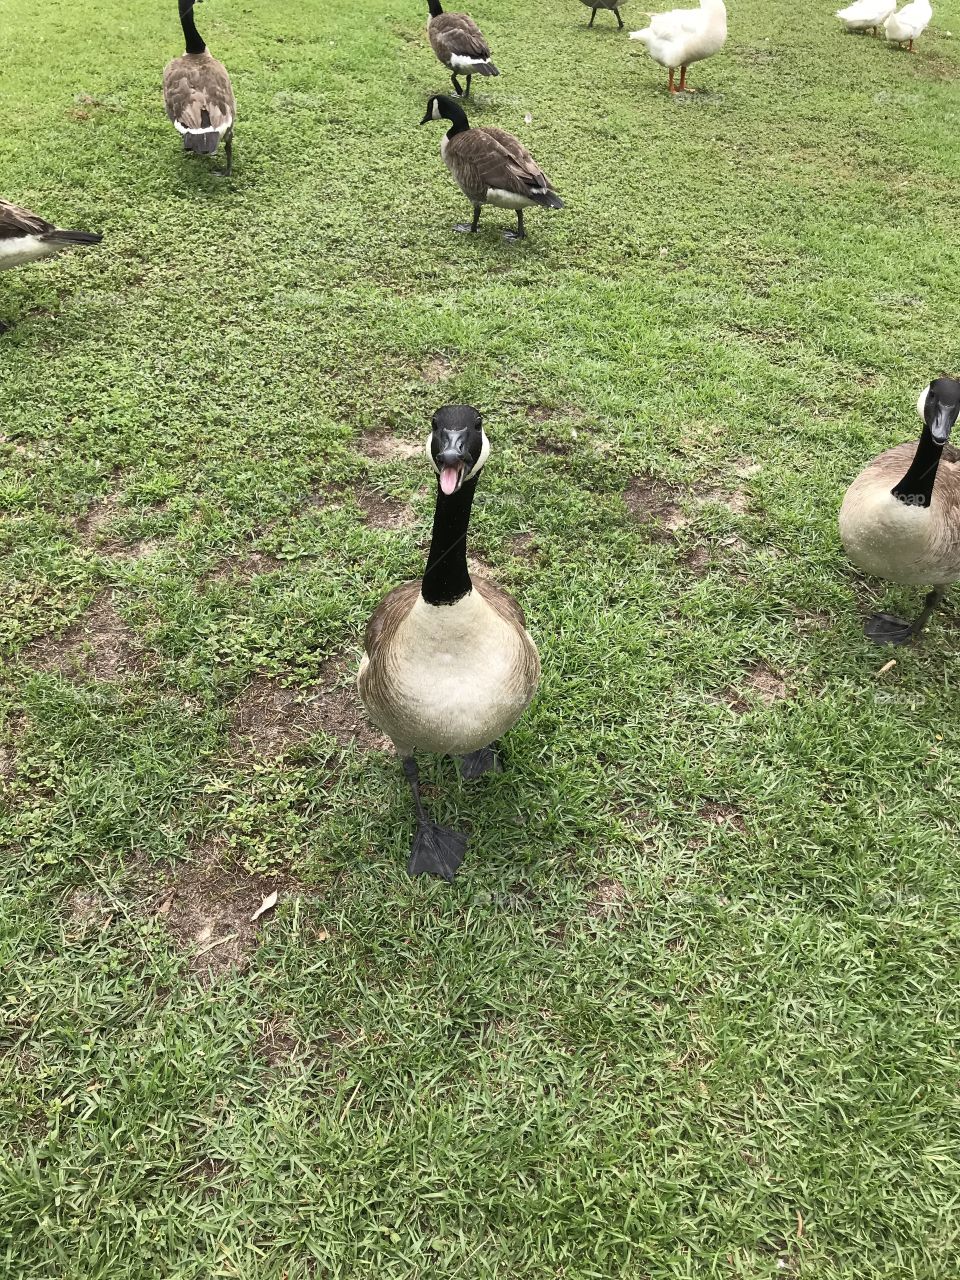 Friendly, photogenic goose